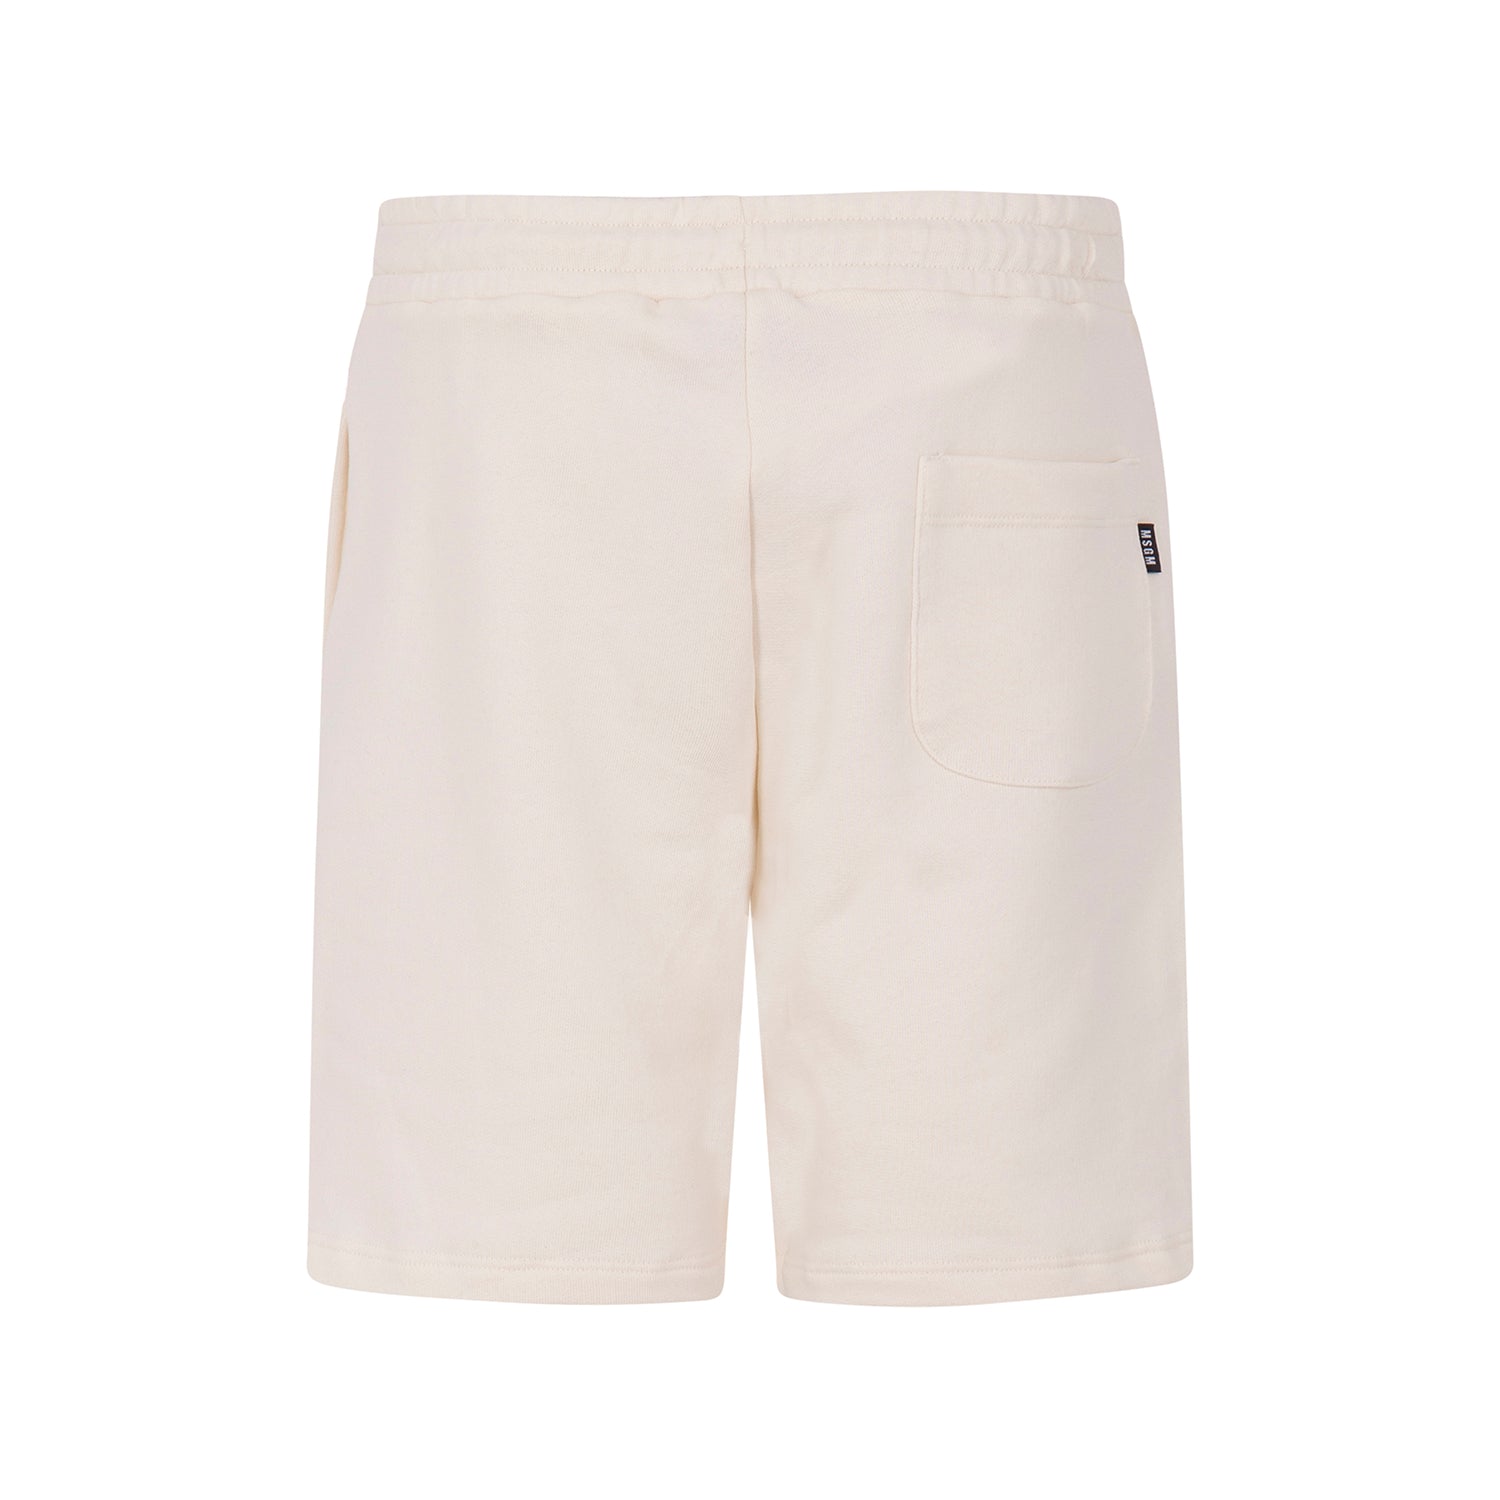 Boys & Girls Cream Cotton Shorts